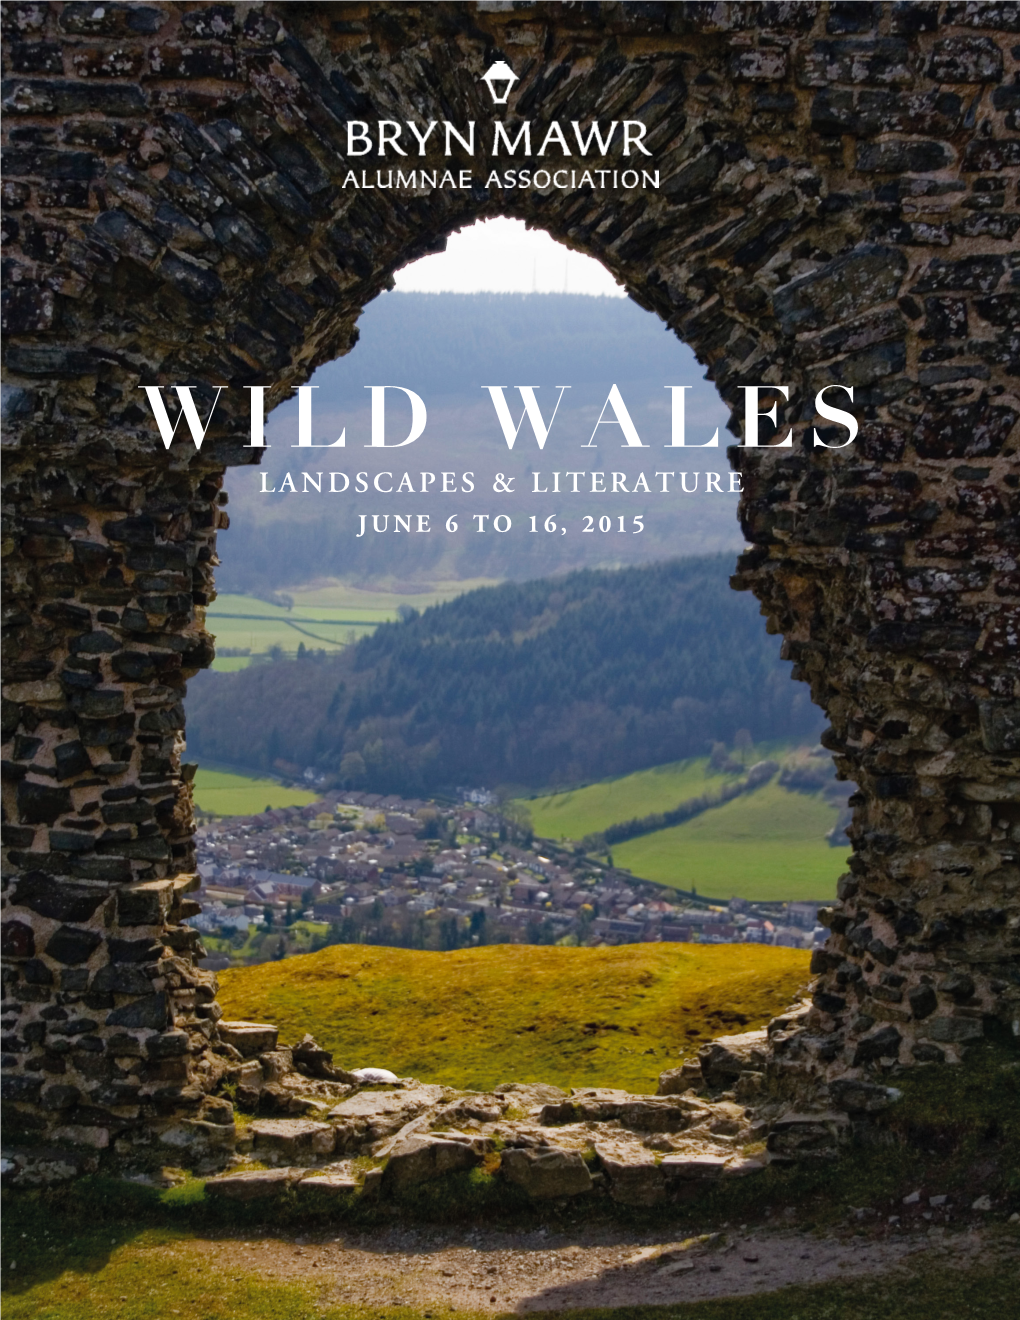 WILD WALES LANDSCAPES & LITERATURE JUNE 6 to 16, 2015 Dear Bryn Mawr Alumnae/I